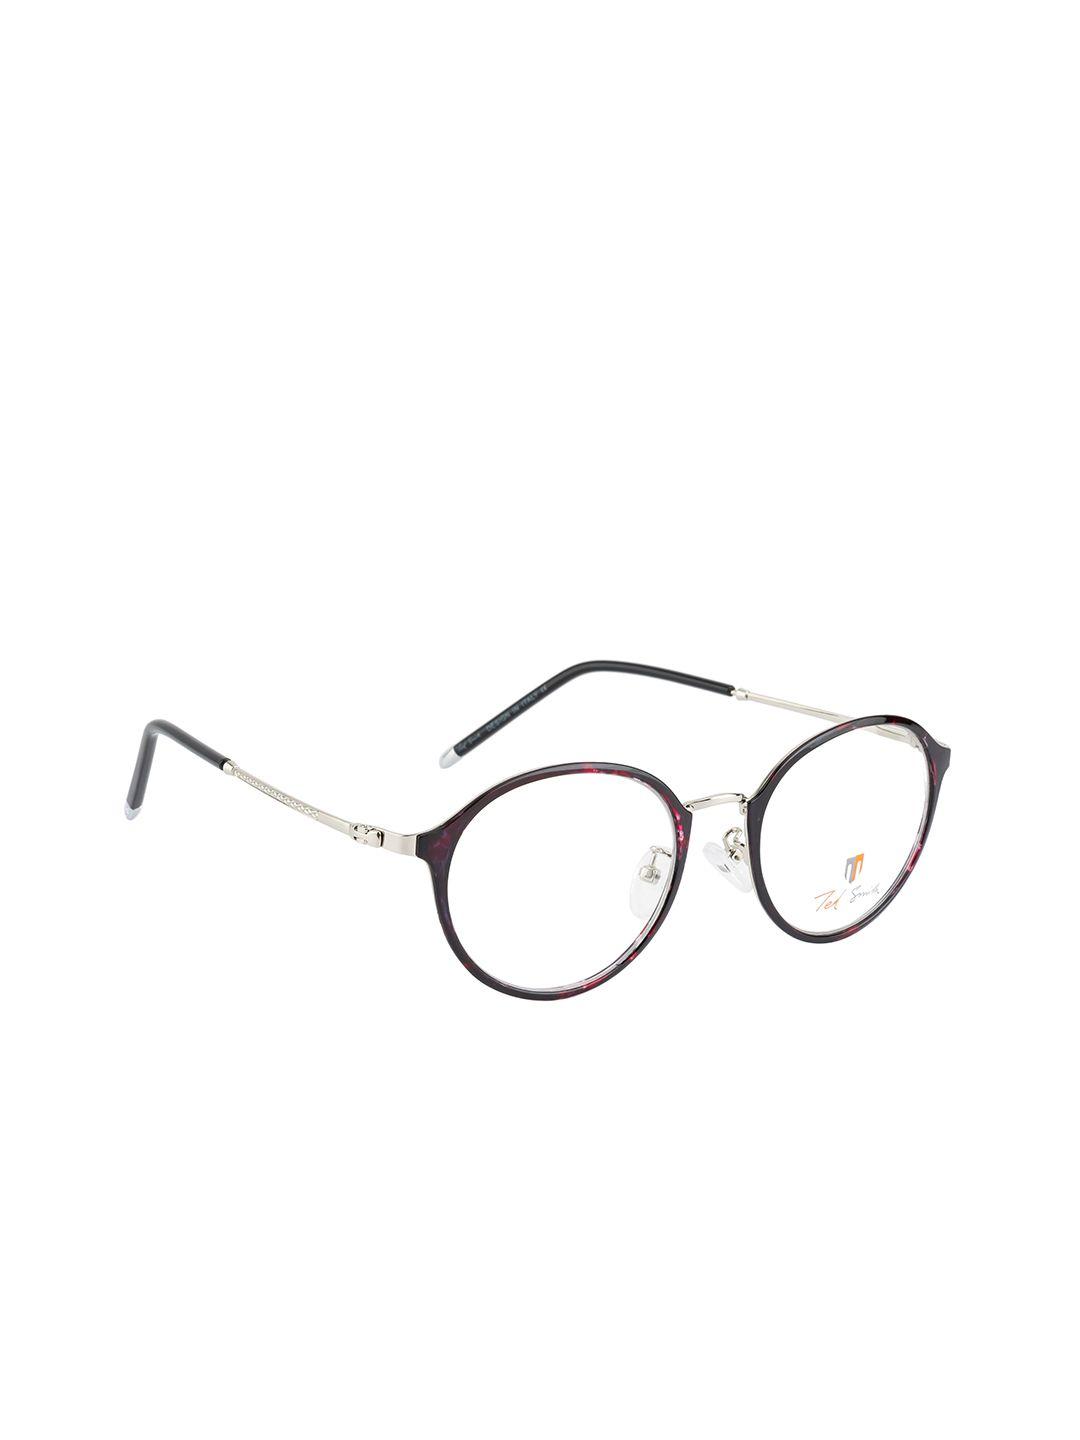 ted smith unisex silver-toned & maroon full rim round frames eyeglasses